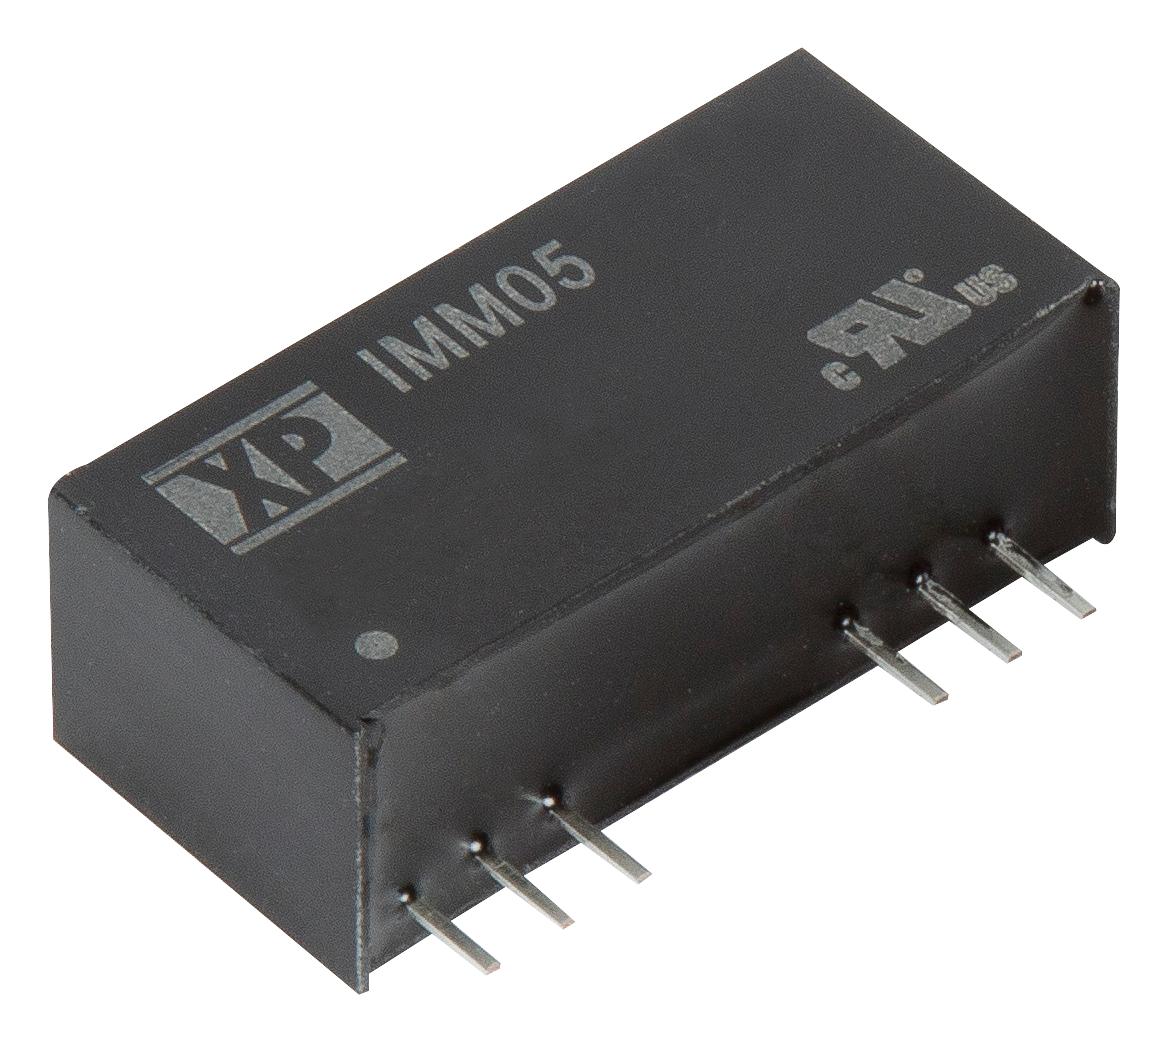 IMM0524D12 DC-DC CONVERTER, 2 O/P, 5W XP POWER